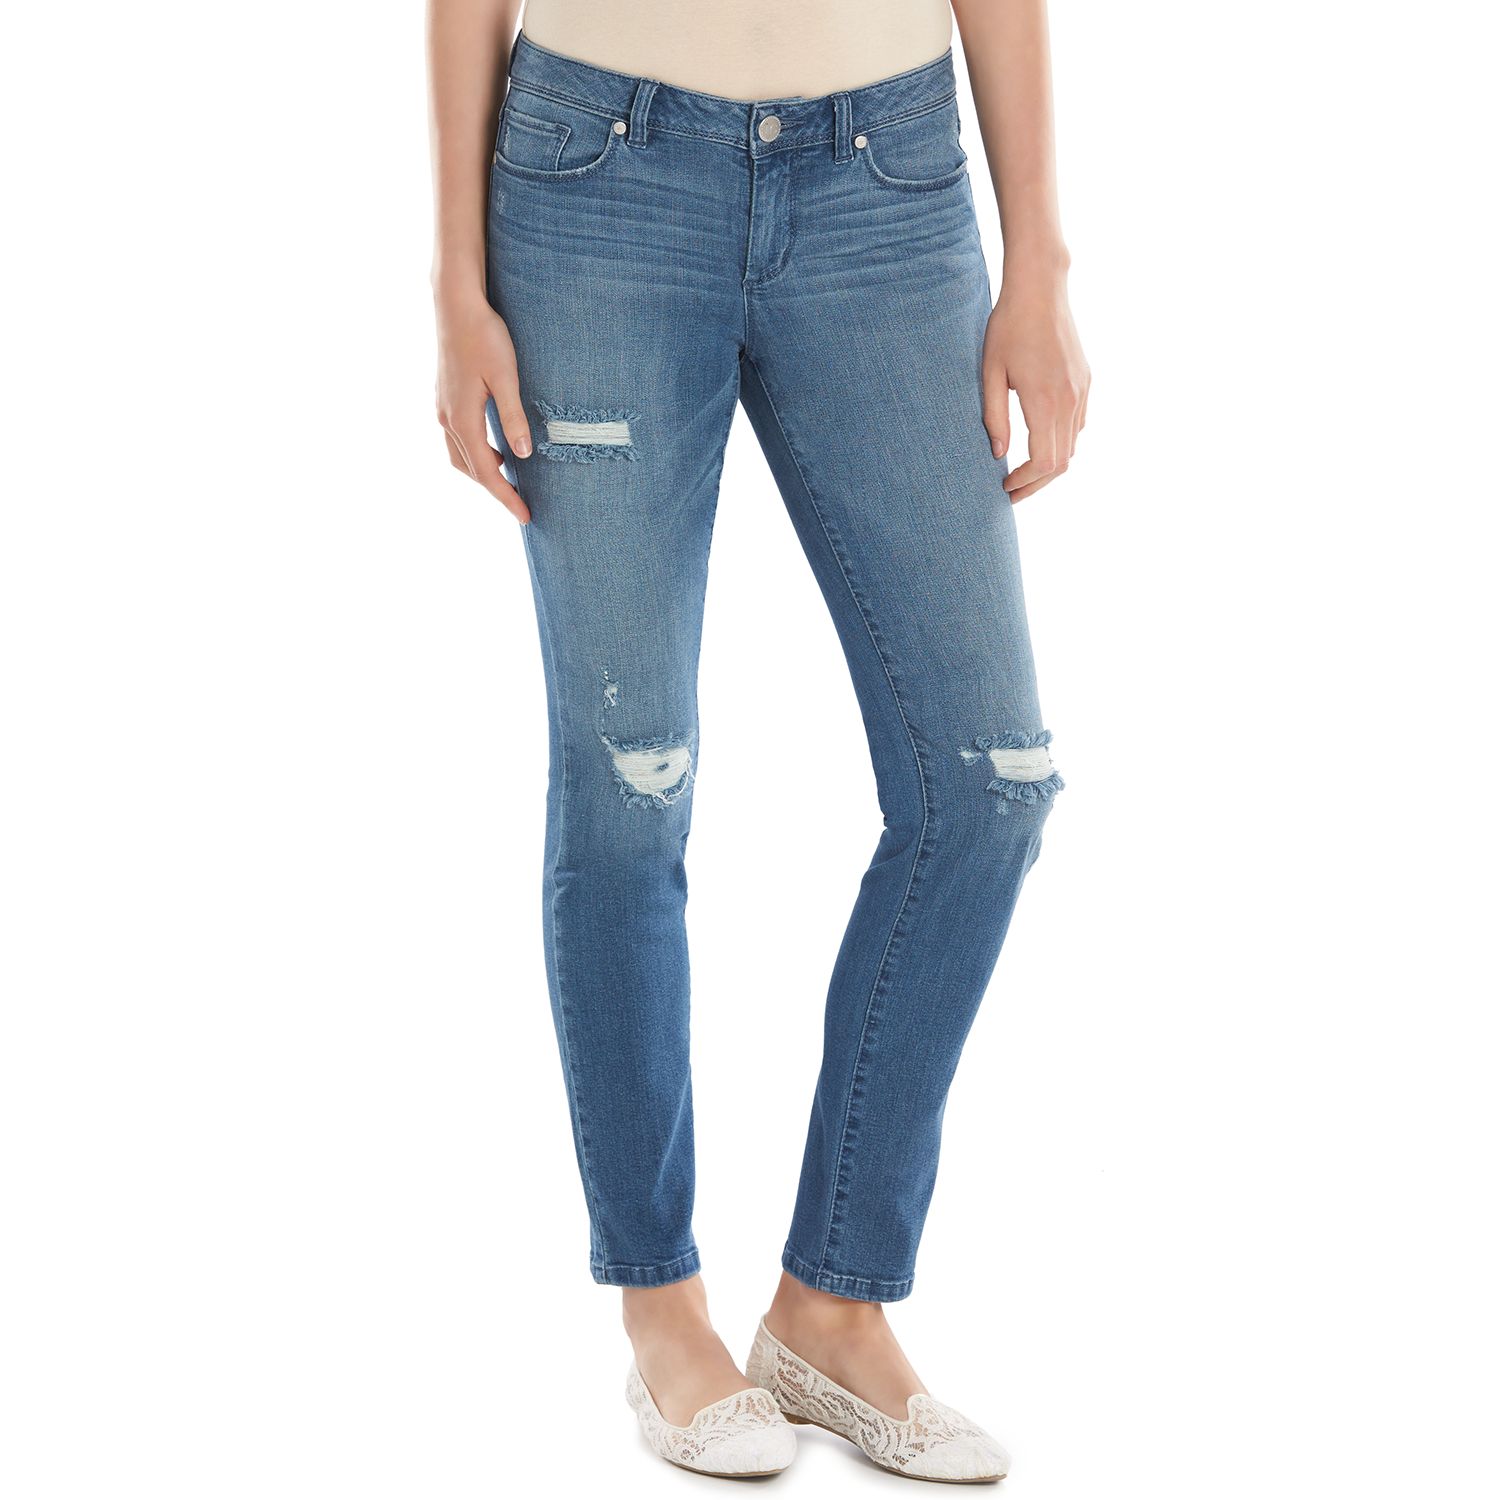 lauren conrad skinny jeans